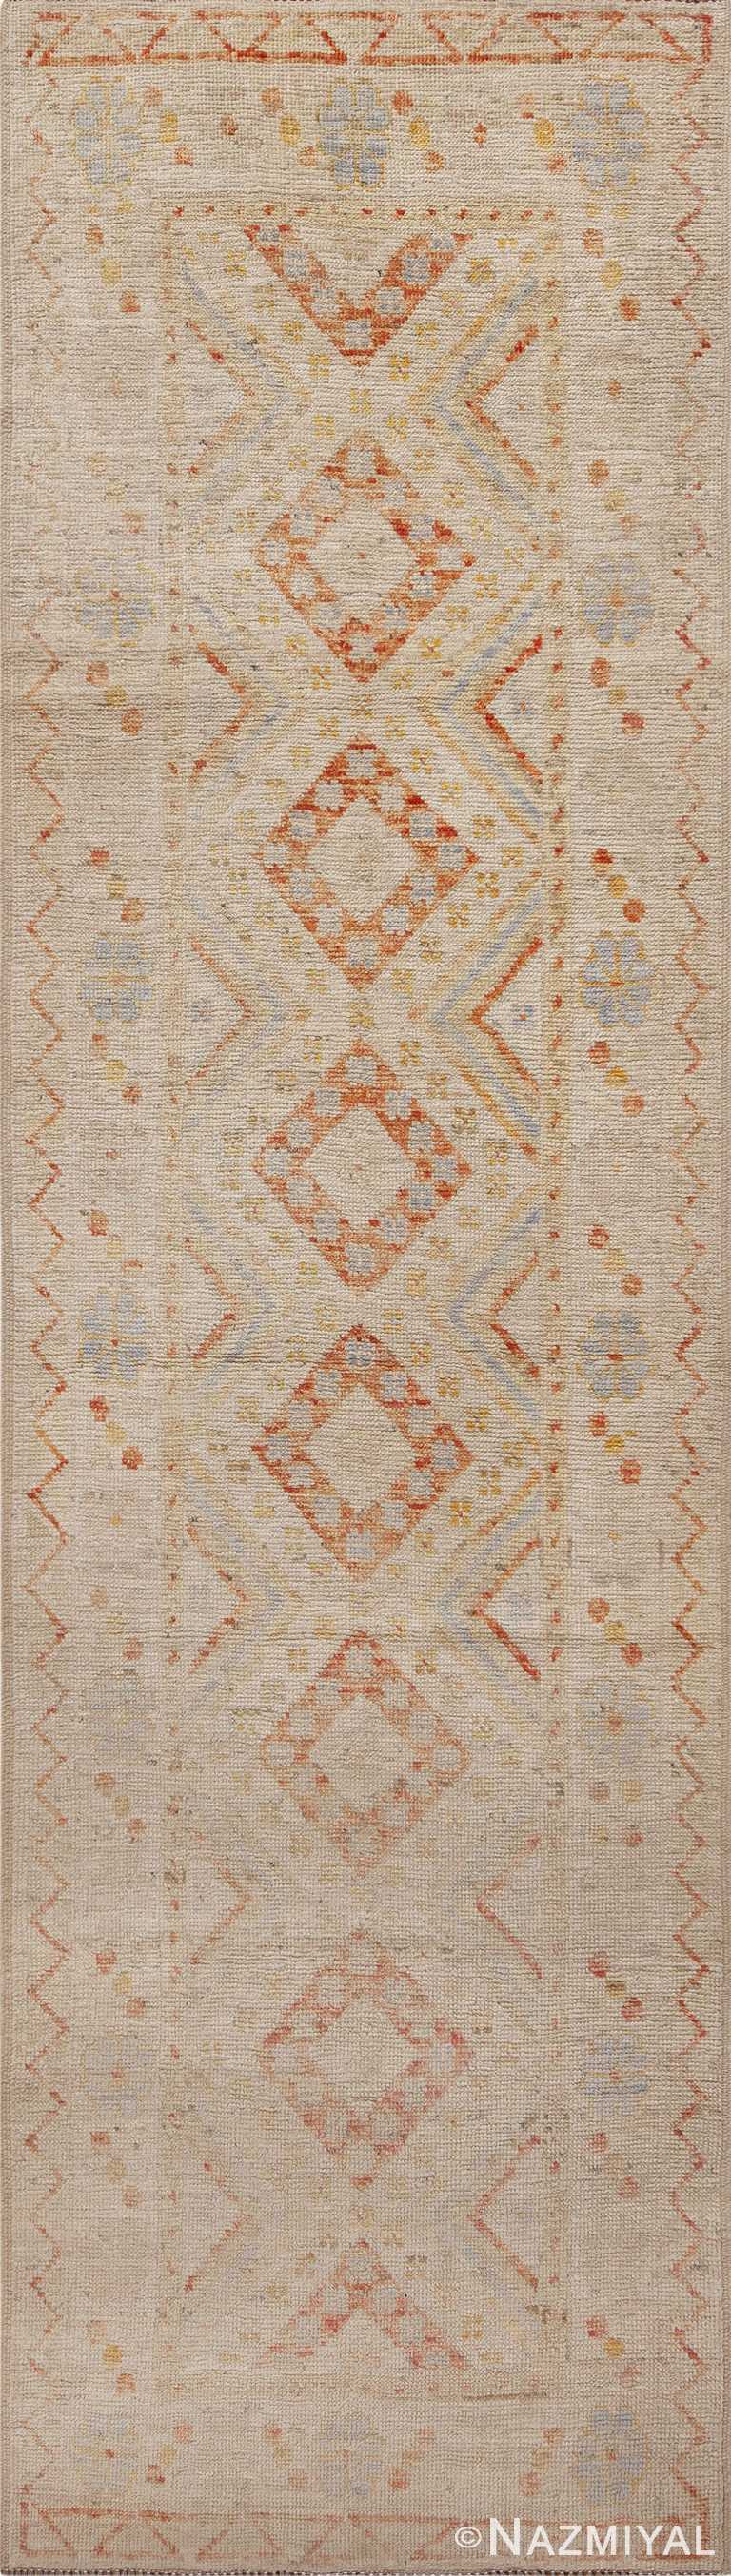 Modern Contemporary Tribal Geometric Rustic Hallway Runner Rug 11045 by Nazmiyal Antique Rugs